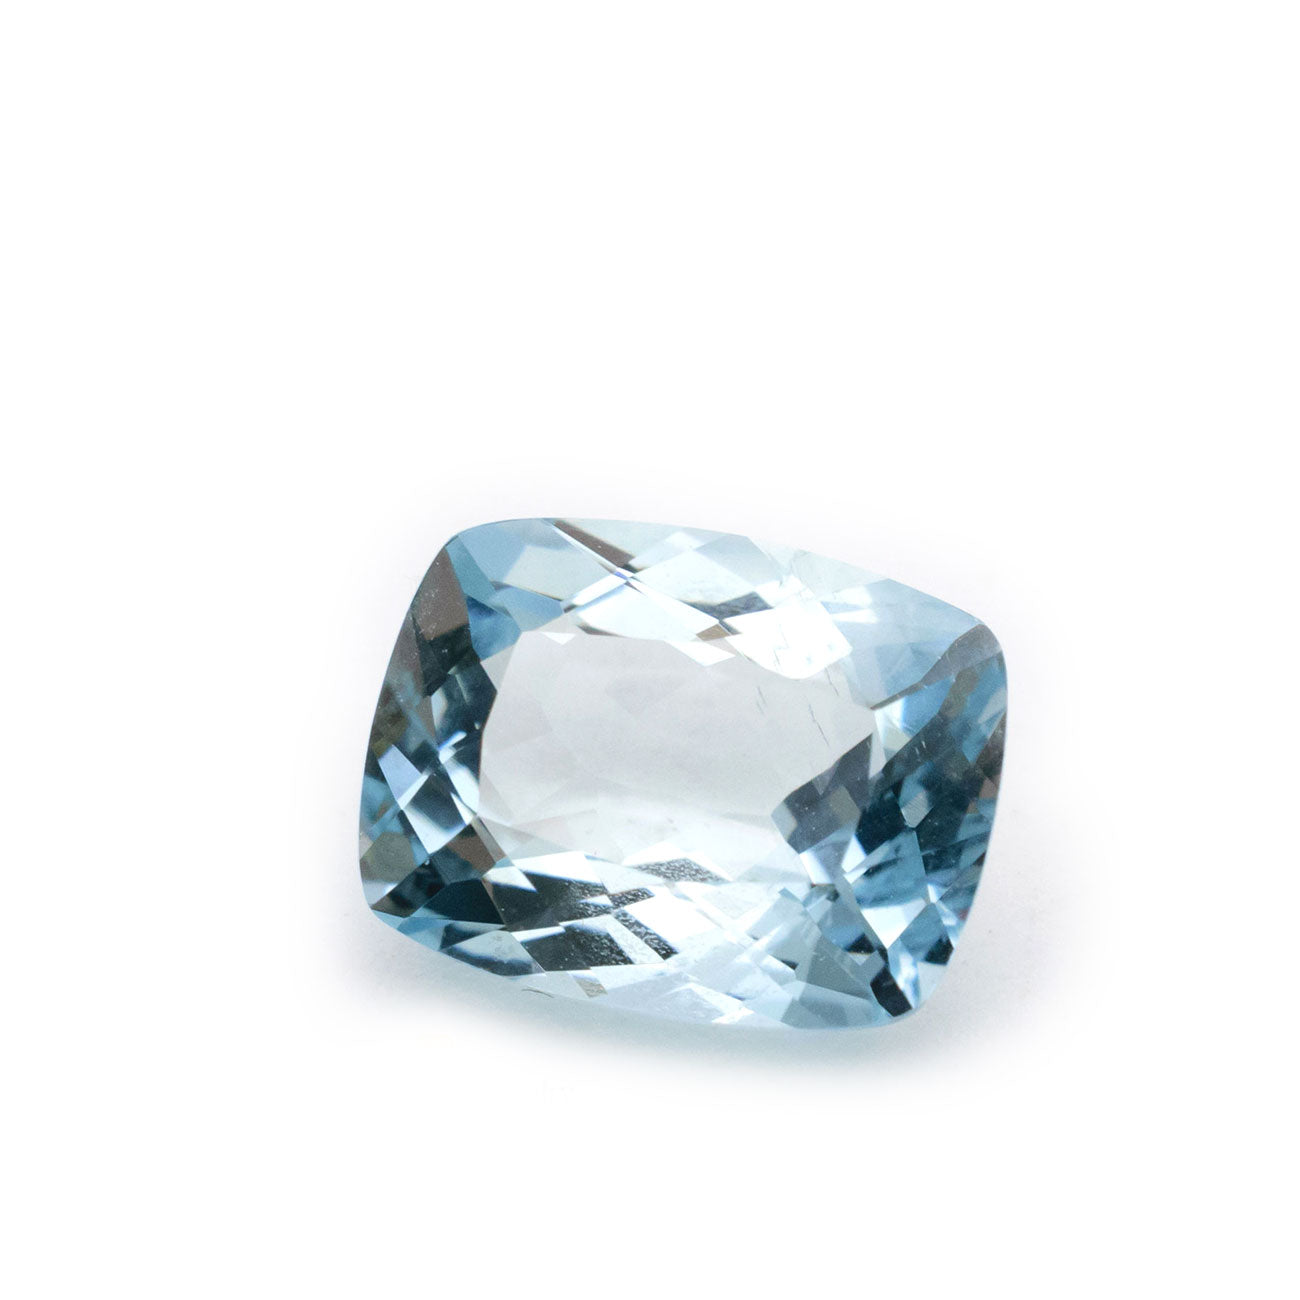 2.28 Carats Blue Brazil Natural Aquamarine Cushion Cut Loose Gemstone - Modern Gem Jewelry 